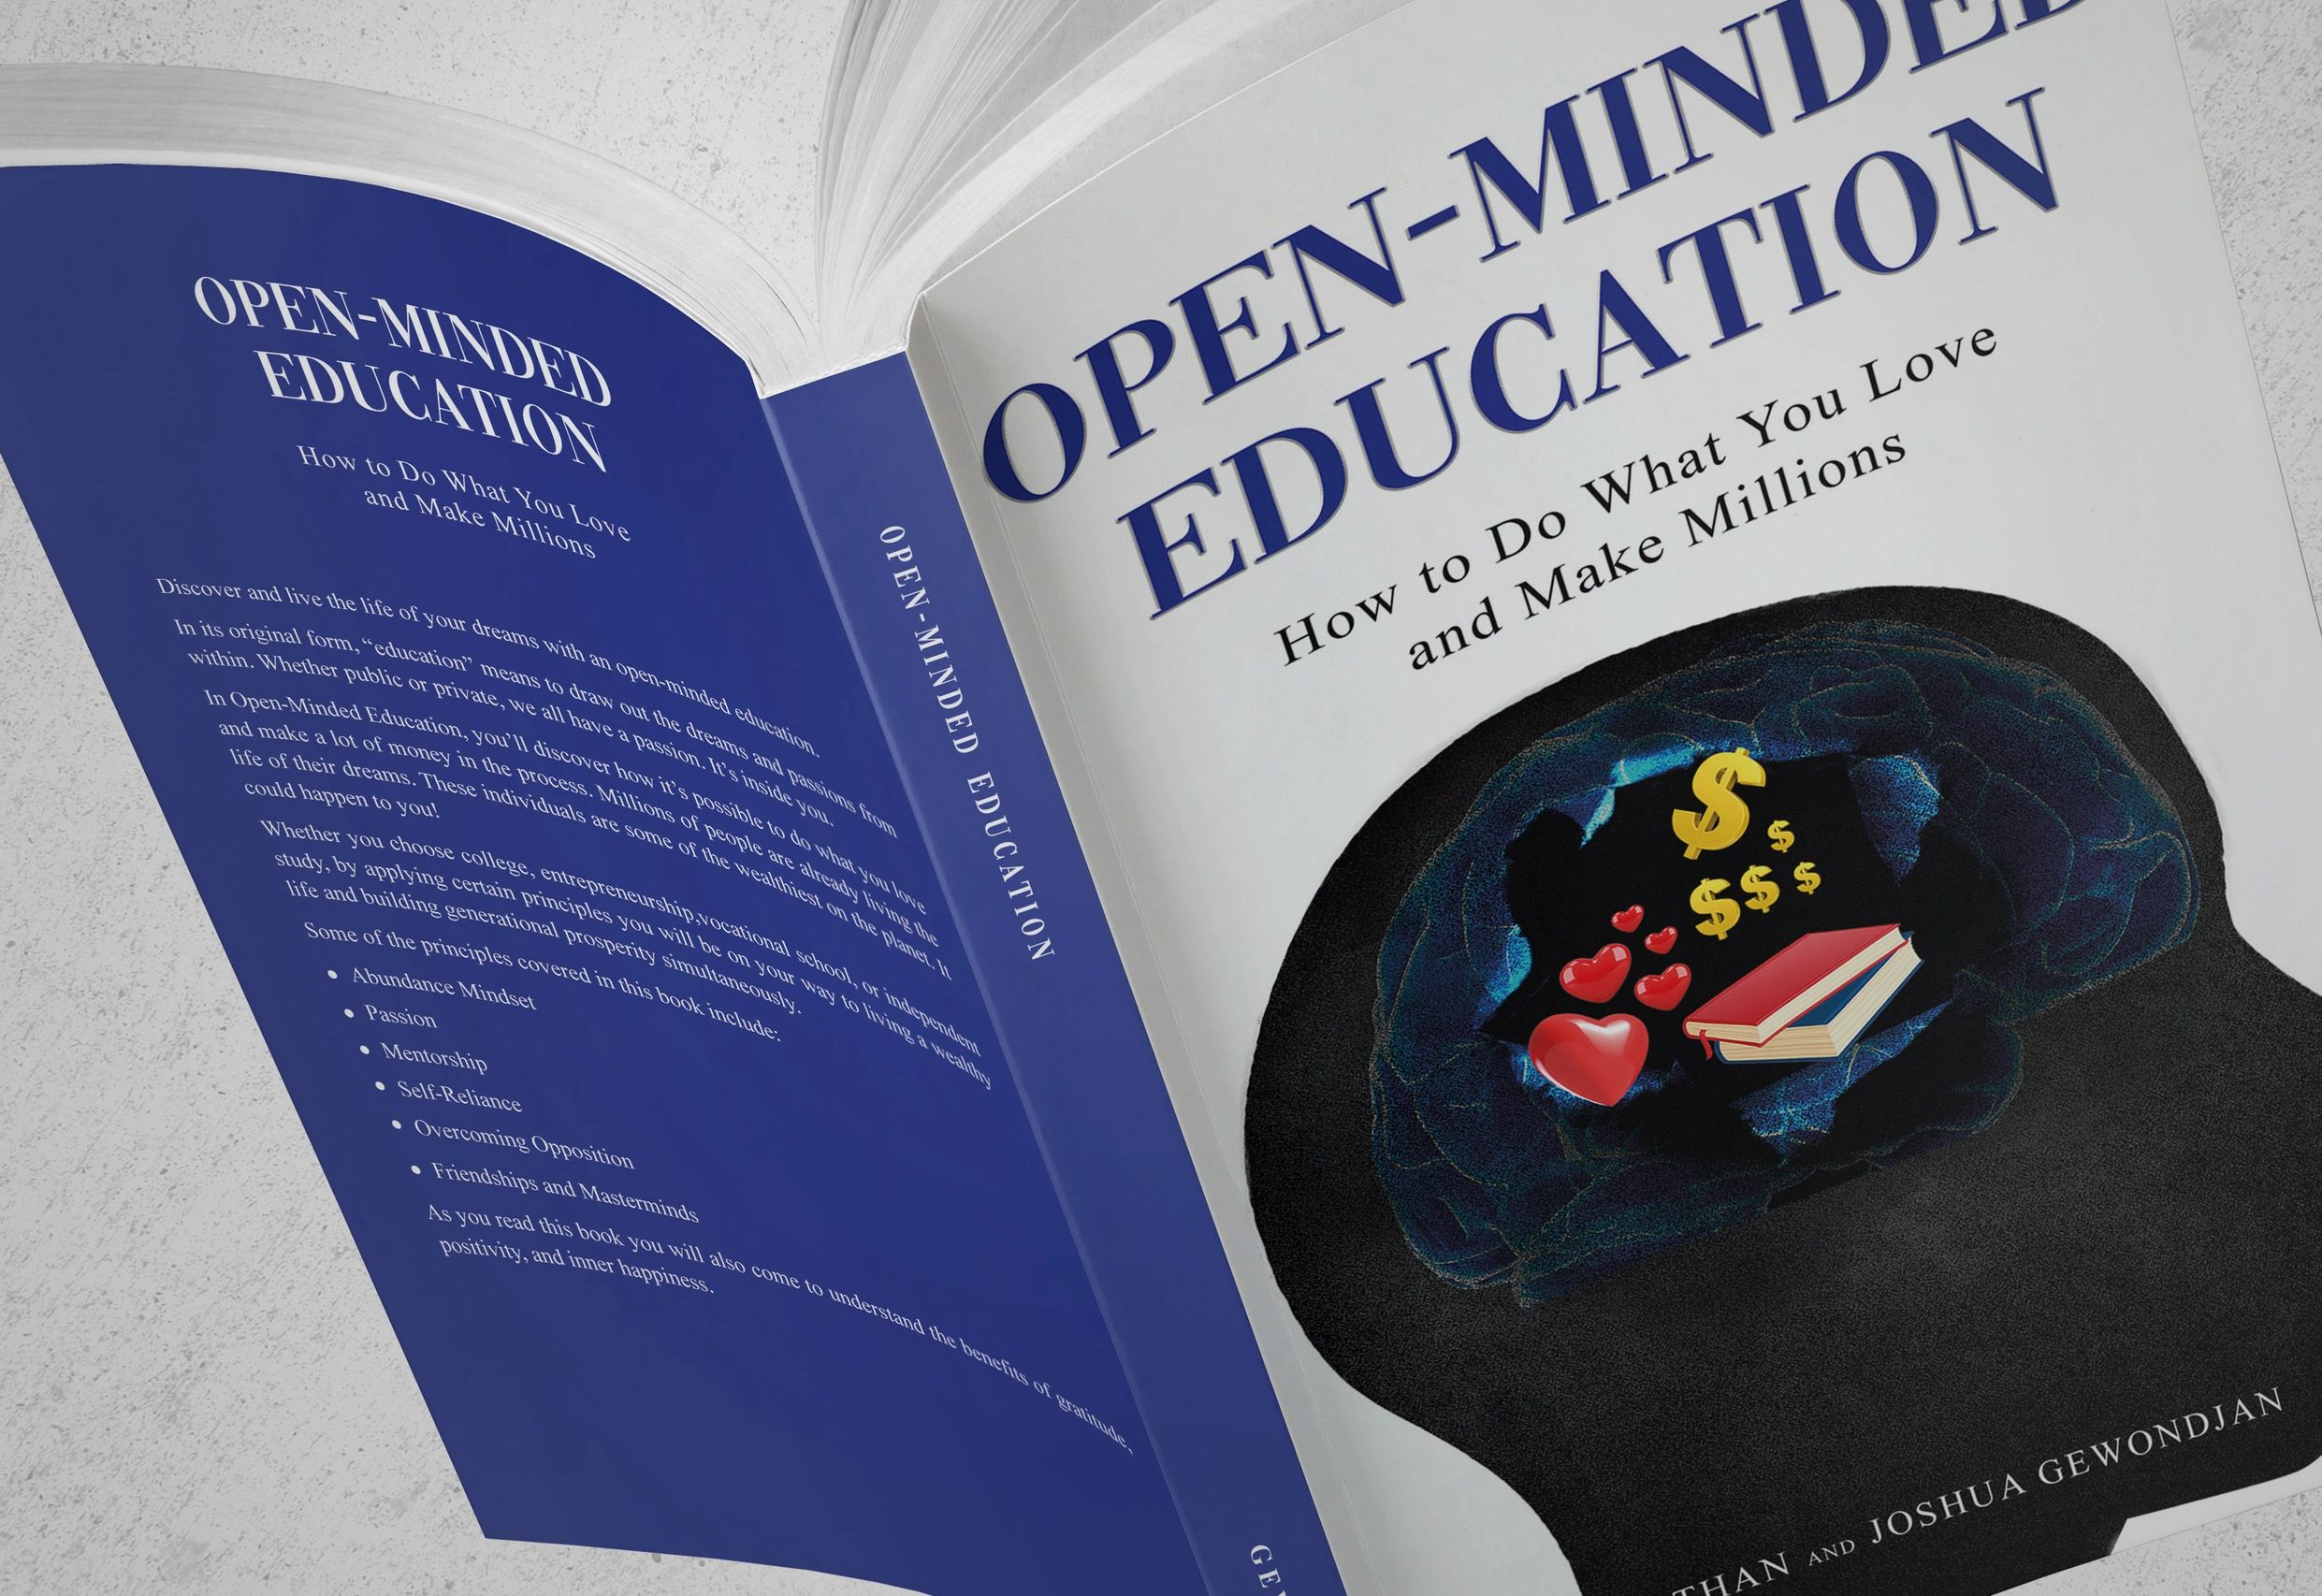 Open-Minded Education book written by Nathan & Joshua Gewondjan